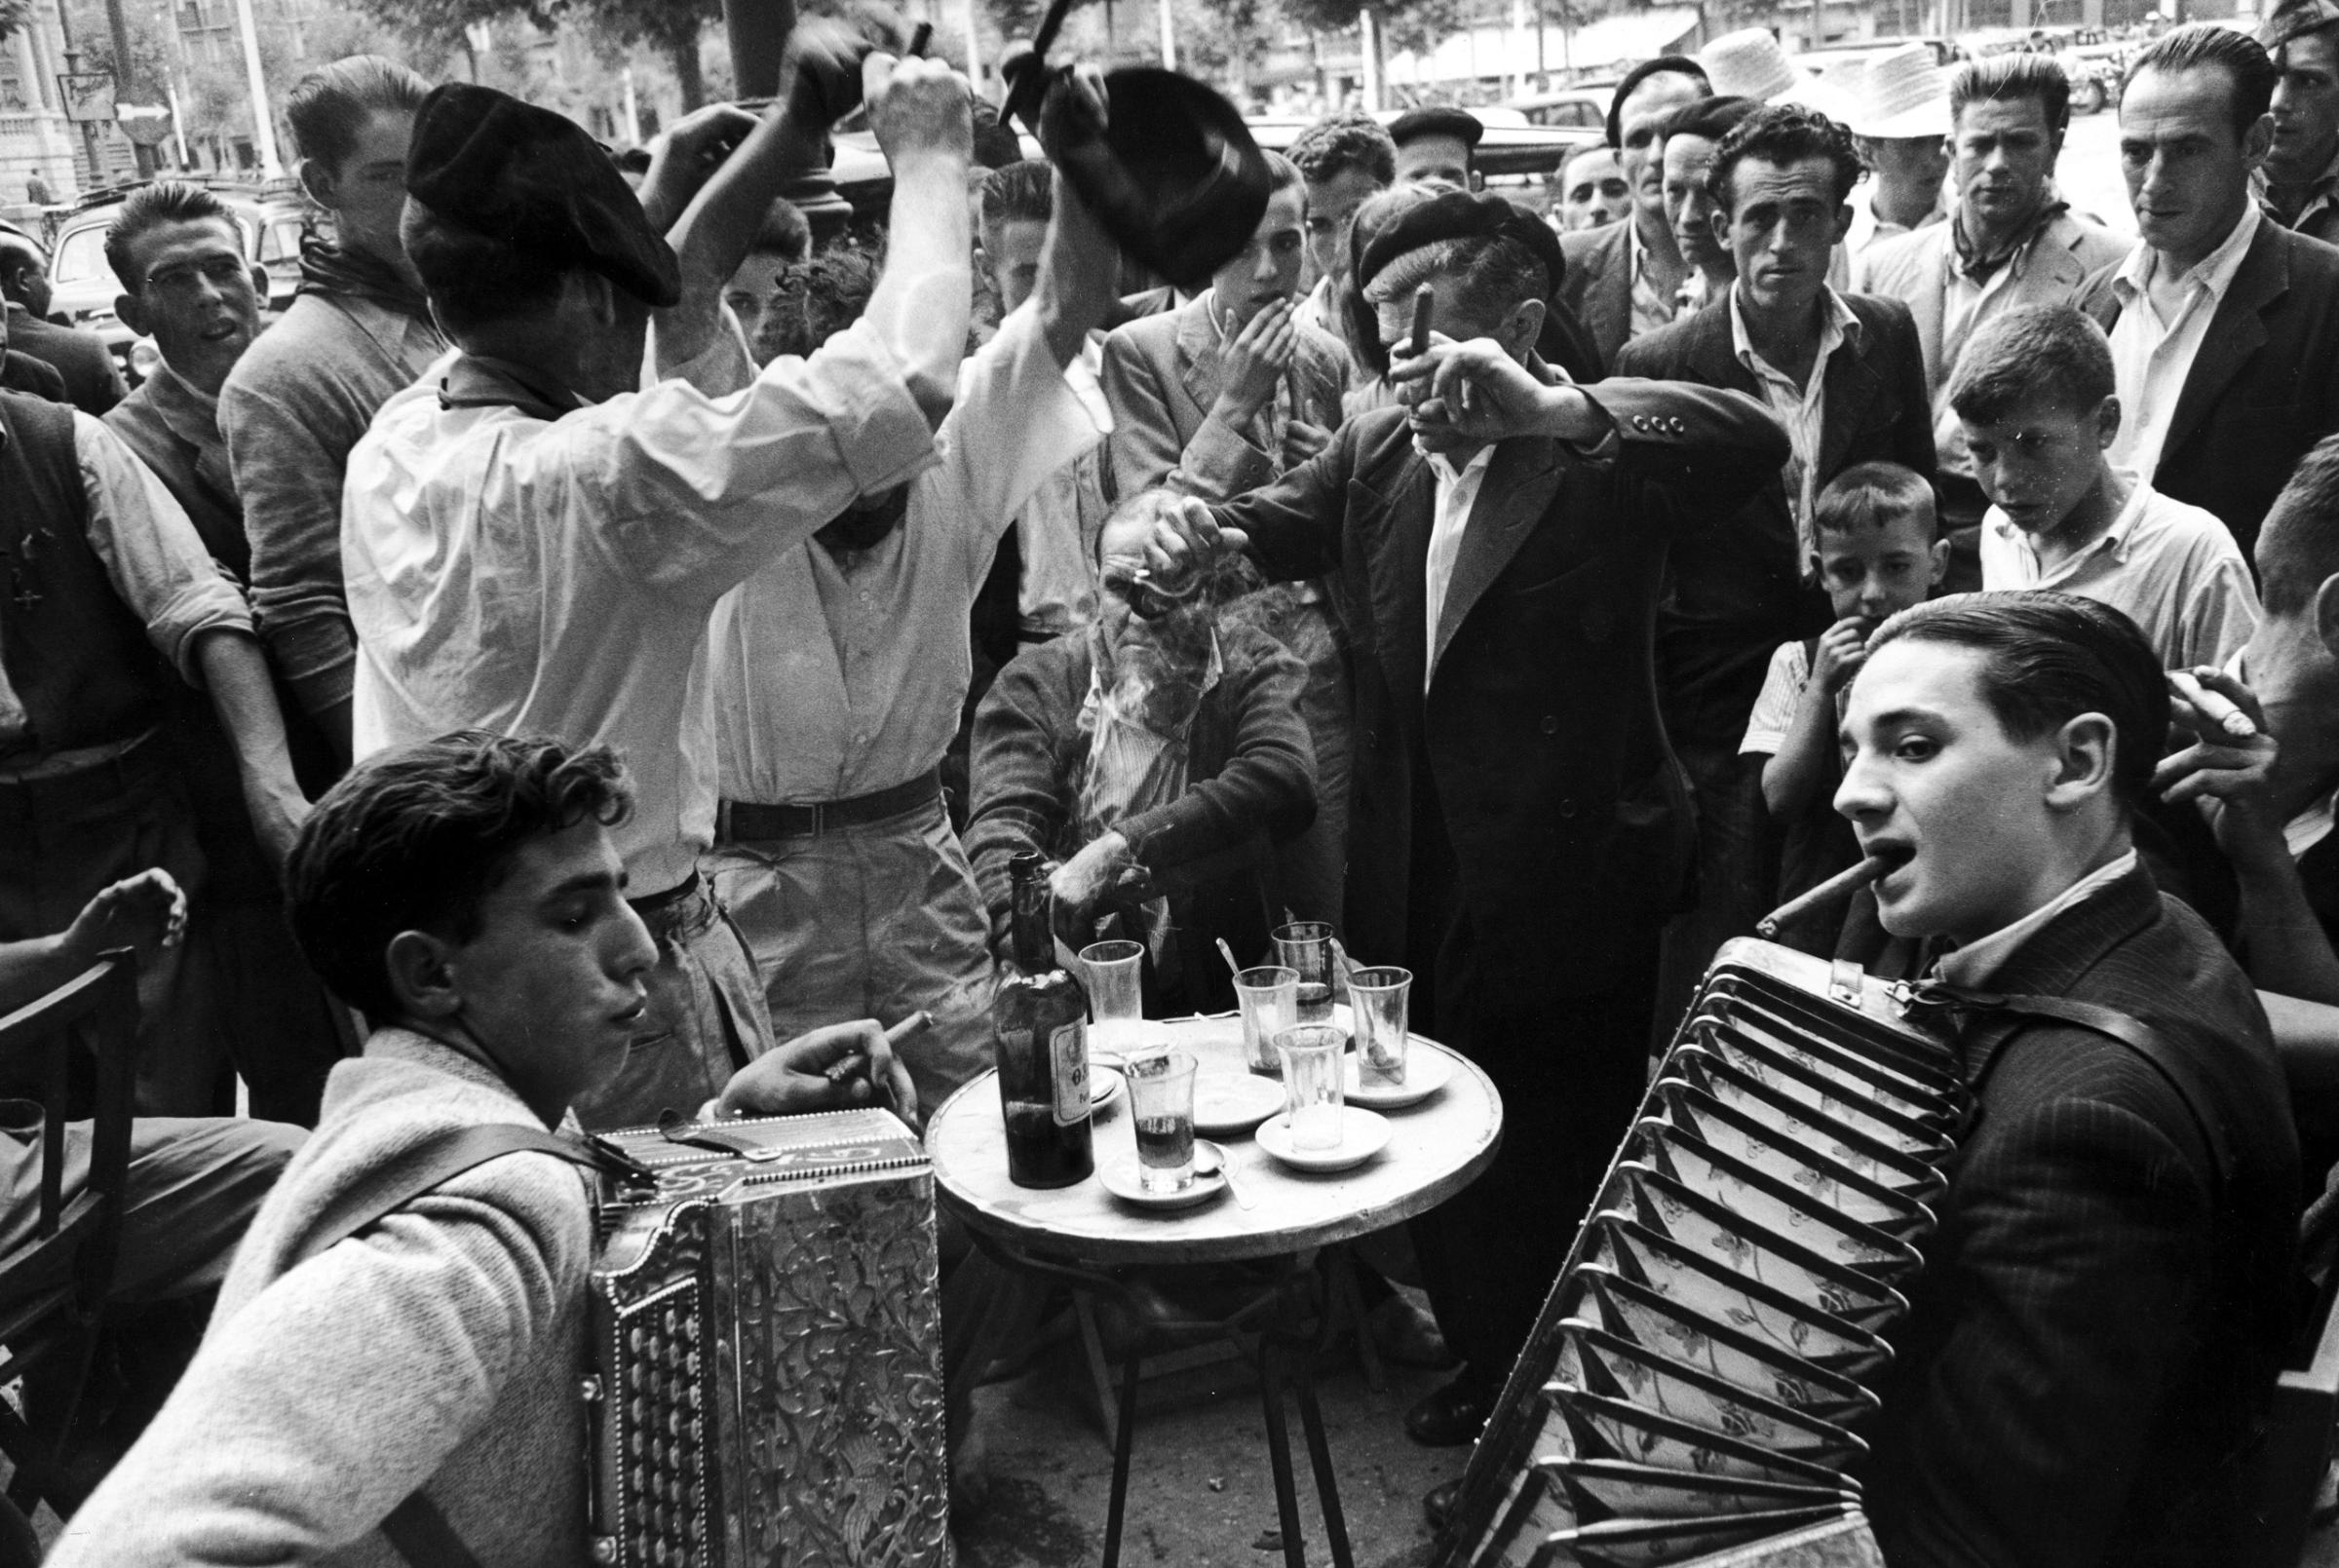 The festival of San Fermín in Pamplona, Spain, 1947.